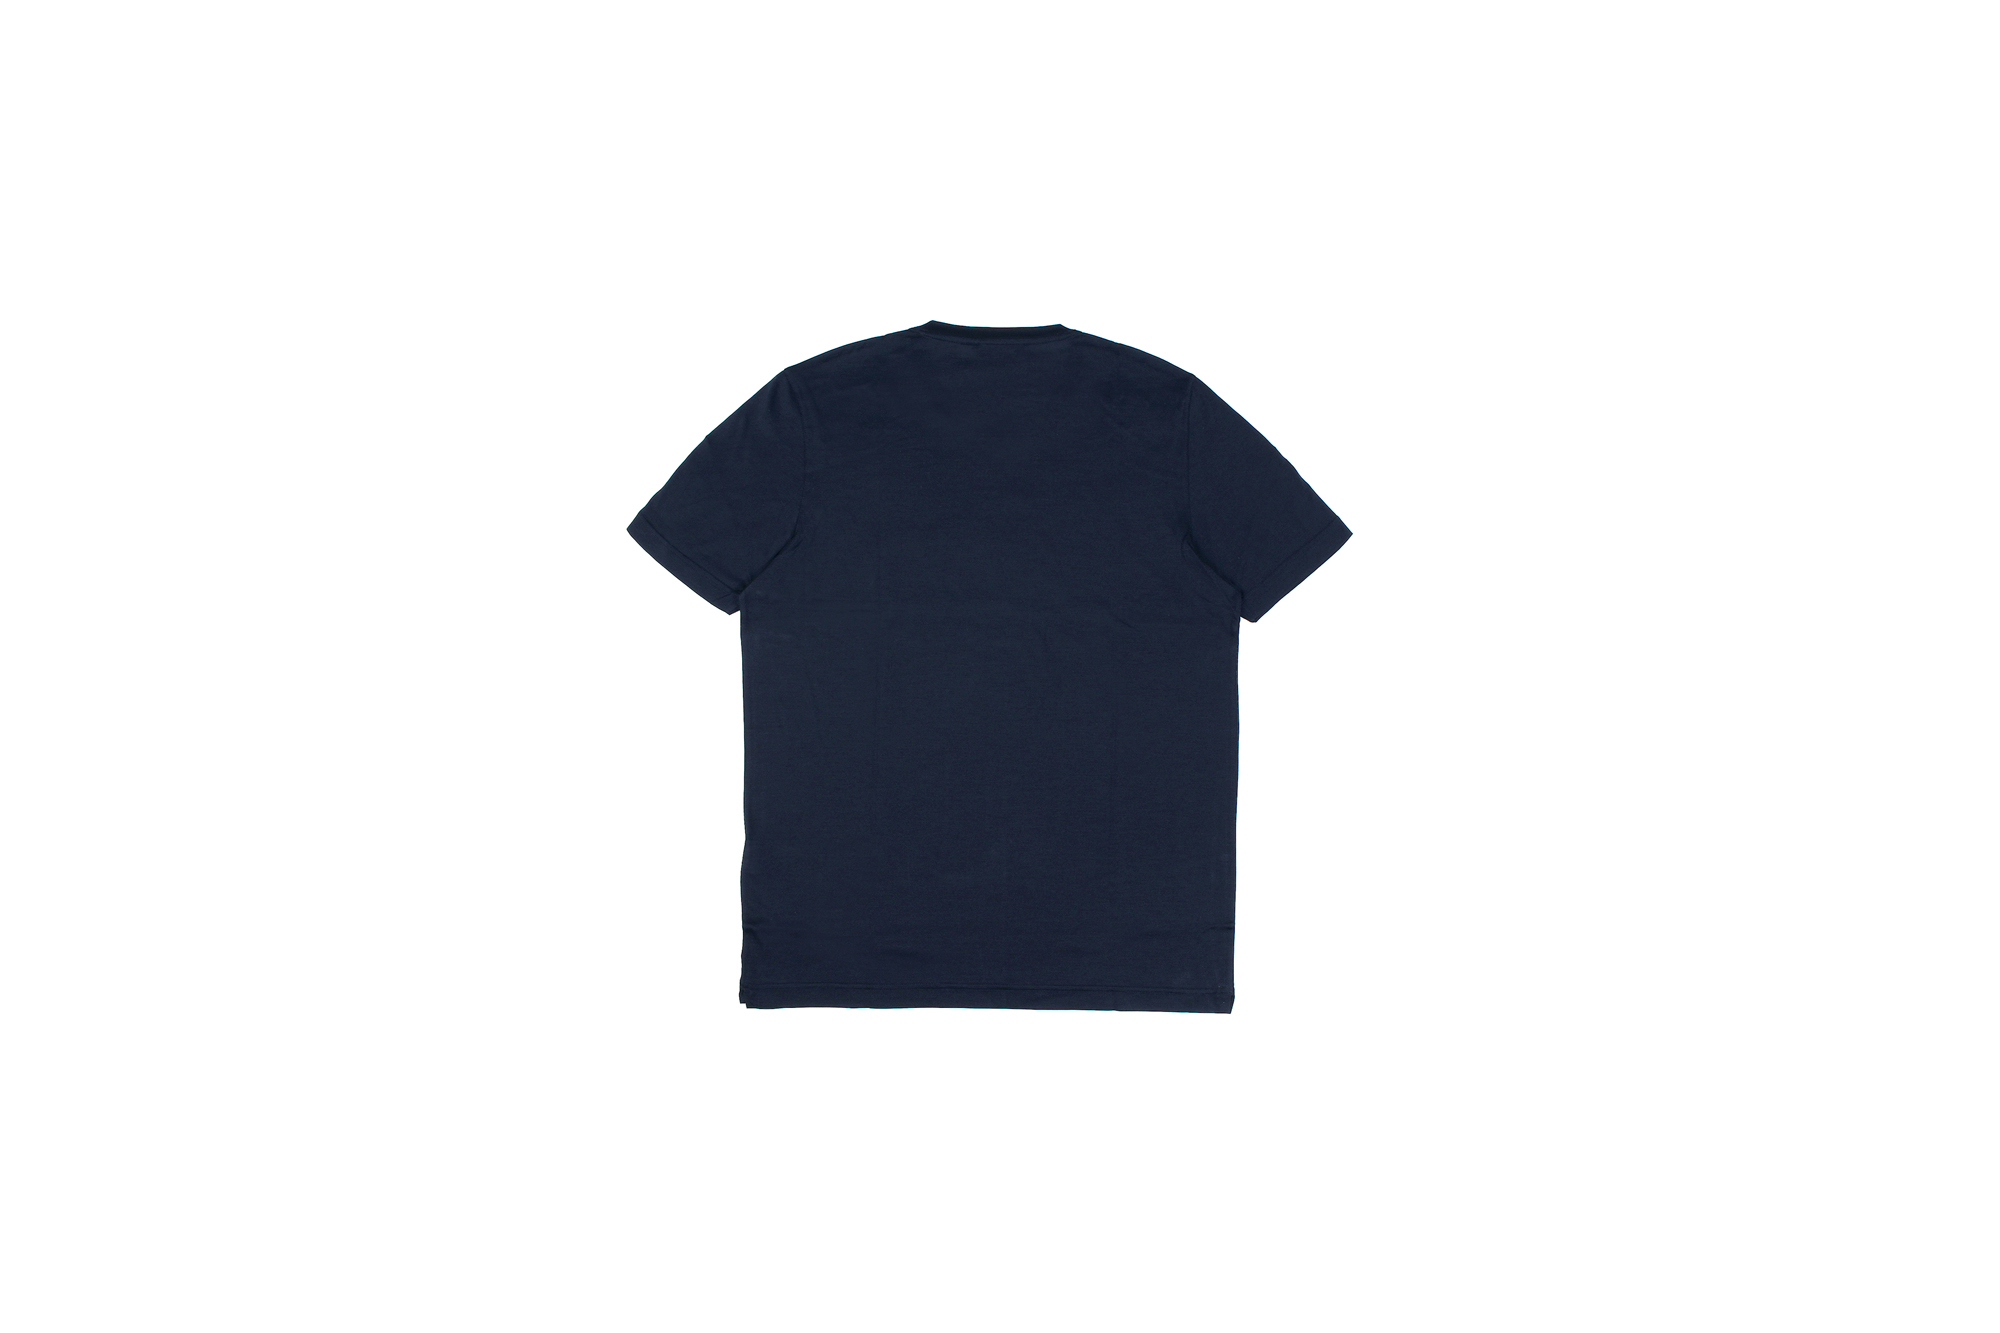 Gran Sasso (グランサッソ) Silk T-shirt (シルク Tシャツ) SETA (シルク 100%) ショートスリーブ シルク Tシャツ NAVY (ネイビー・308) made in italy (イタリア製) 2020 春夏新作 愛知 名古屋 altoediritto アルトエデリット